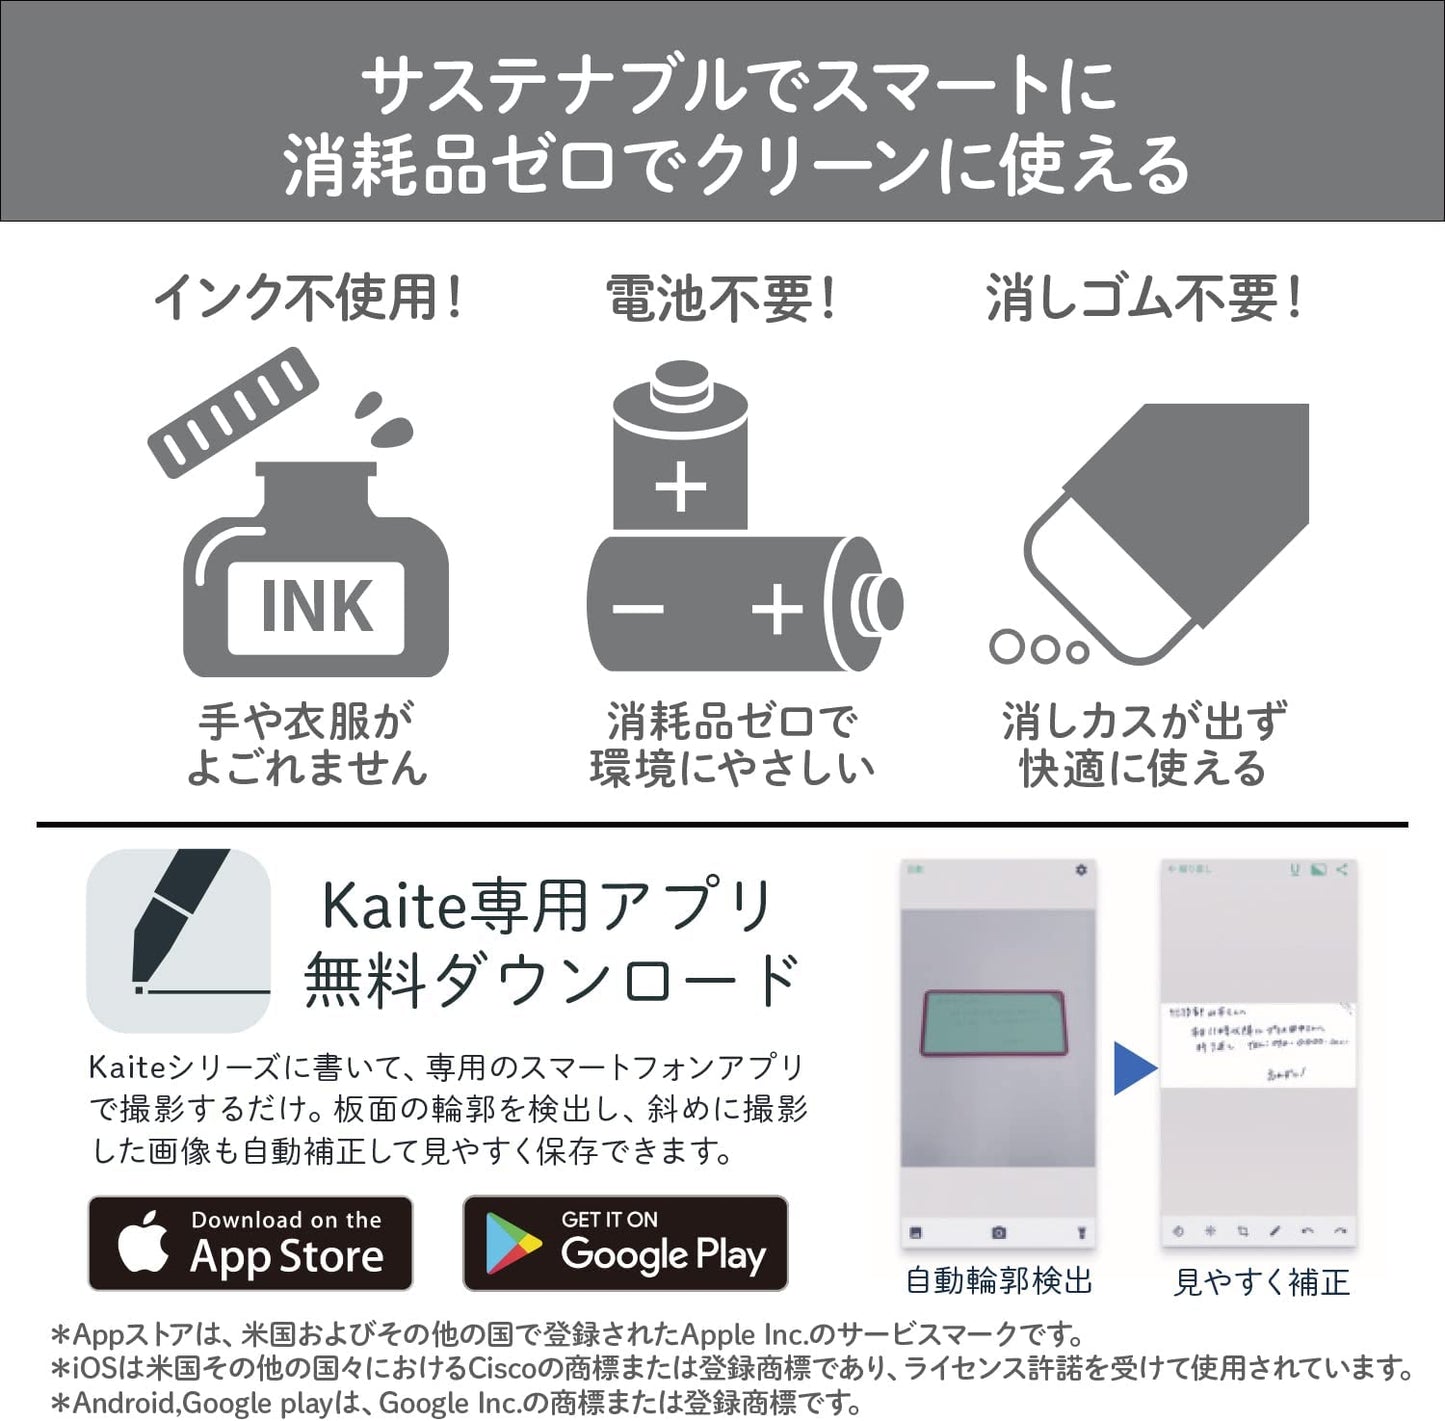 Kaite Memo Pad Mini - No Battery!